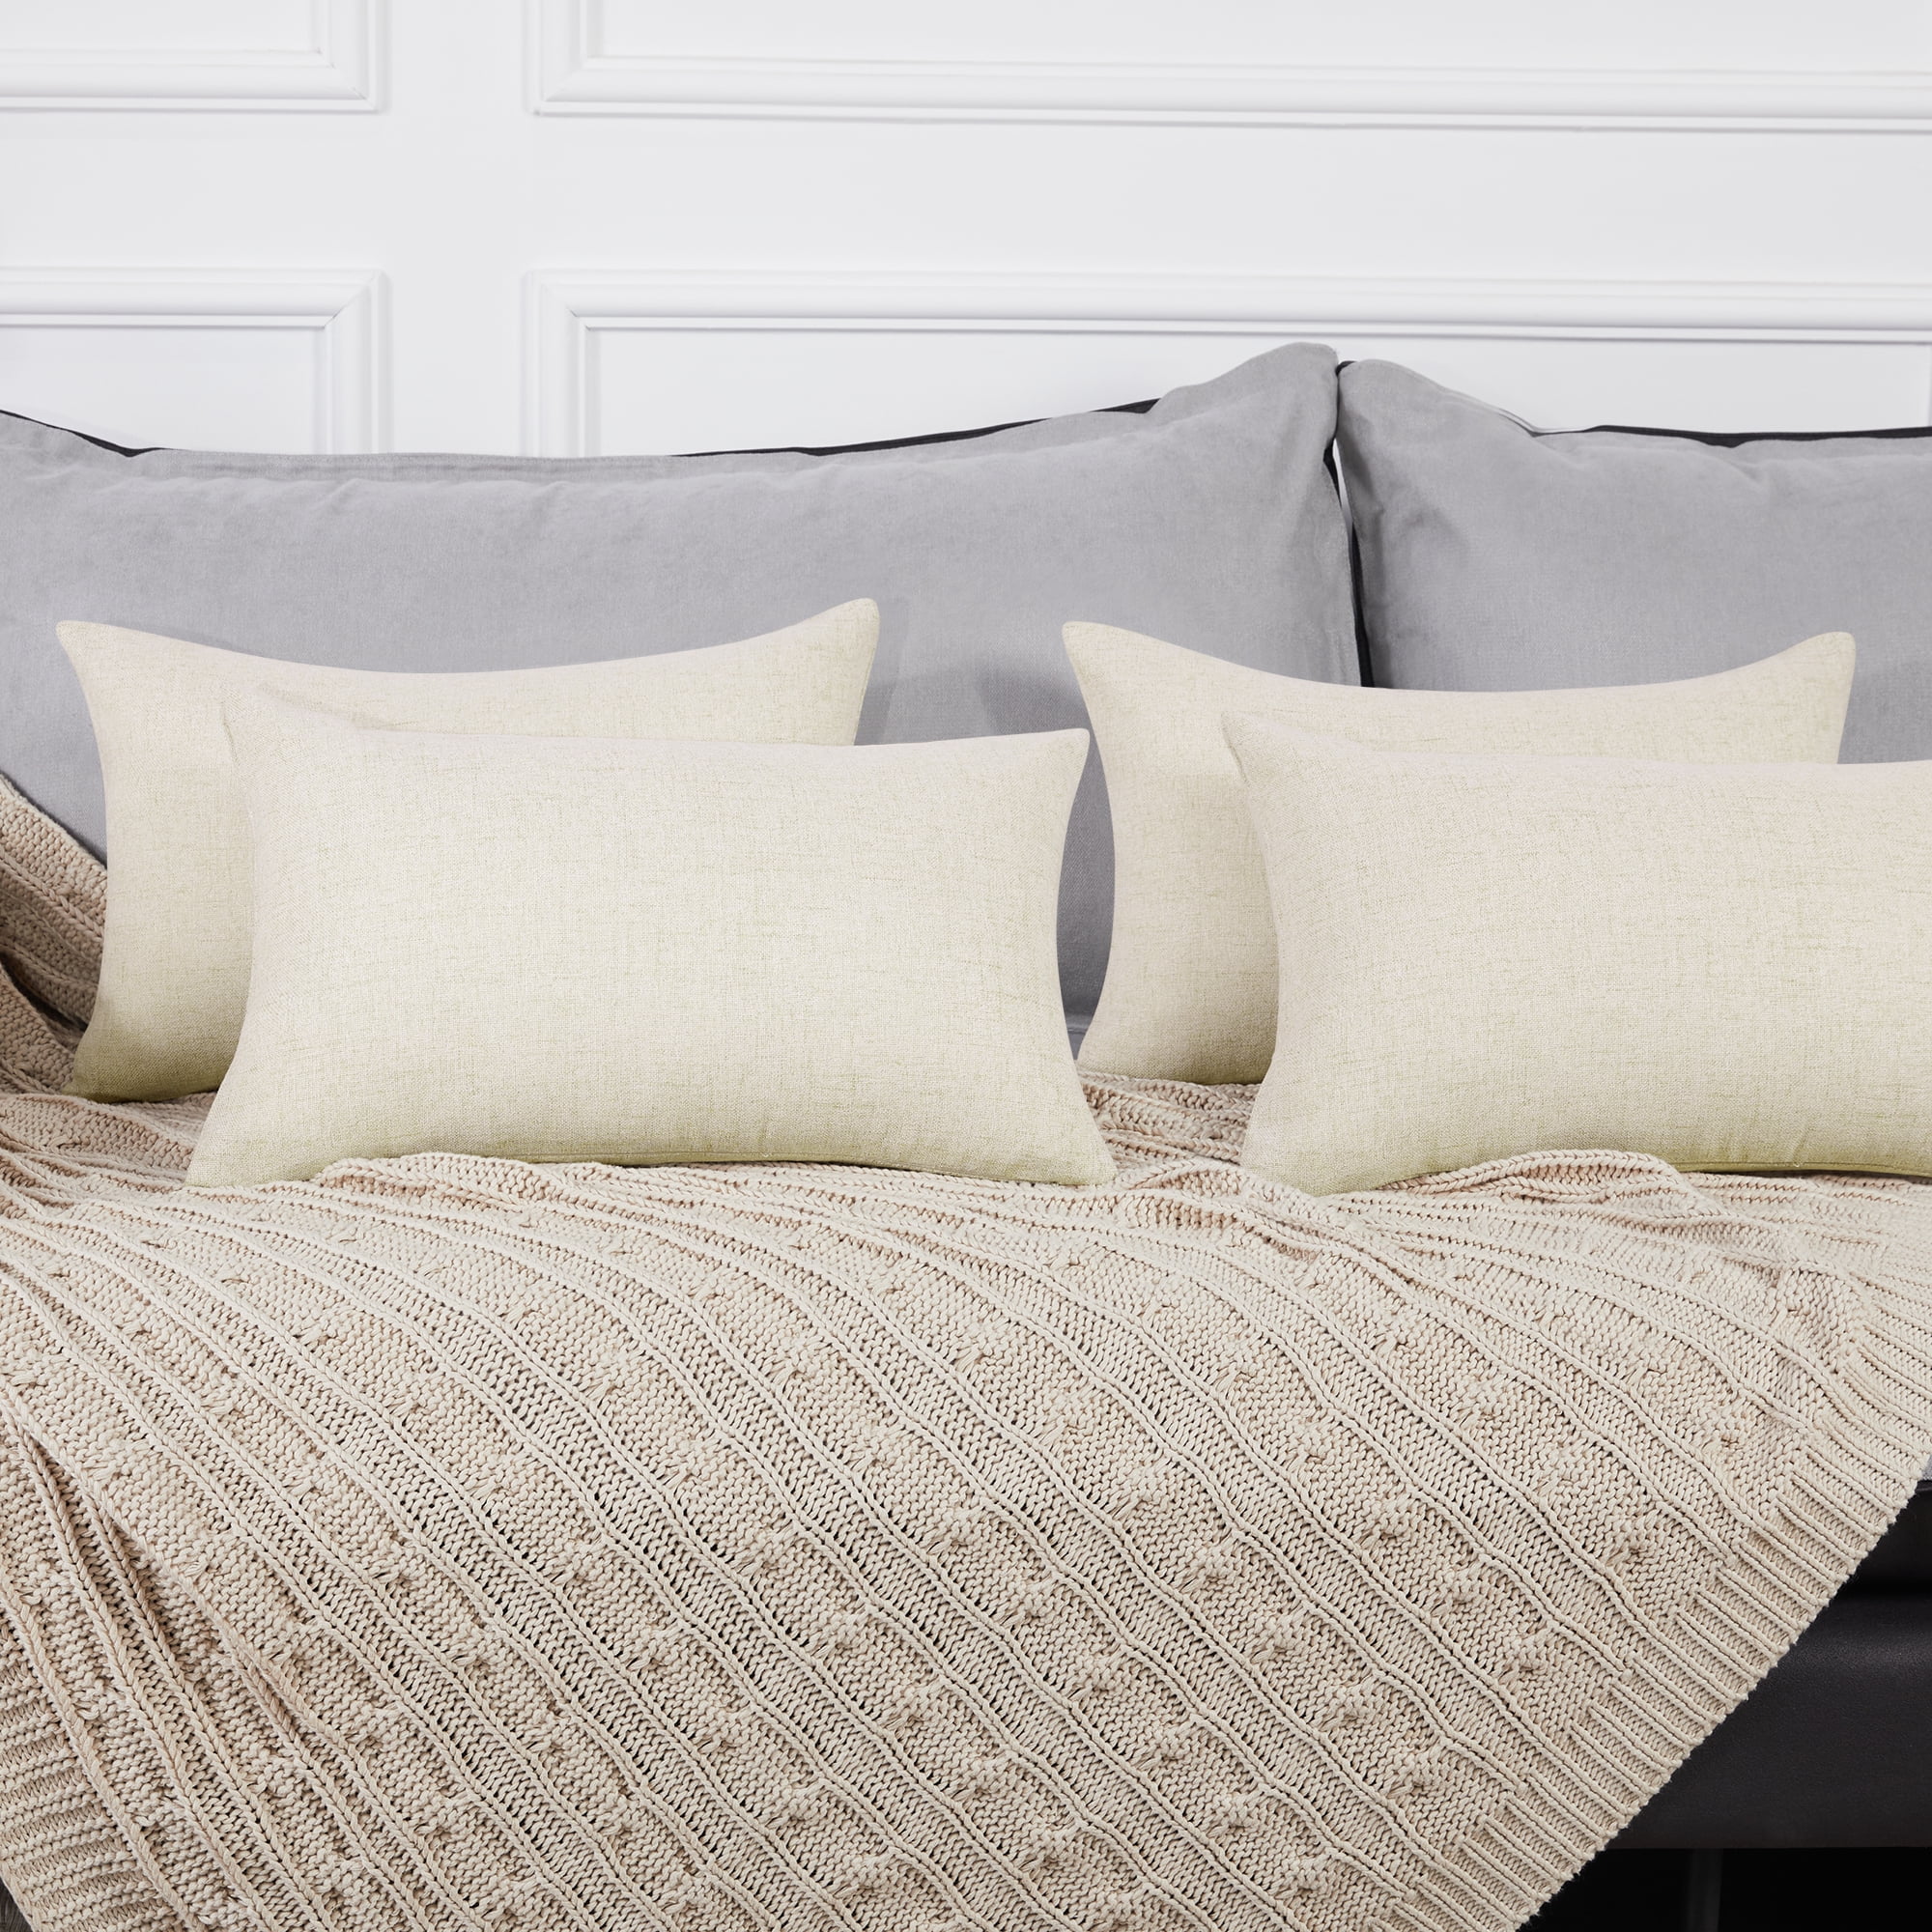 Kitty Square Decorative Pillow Case Fashion Simple Cushion Cover Bed Sofa Decor 